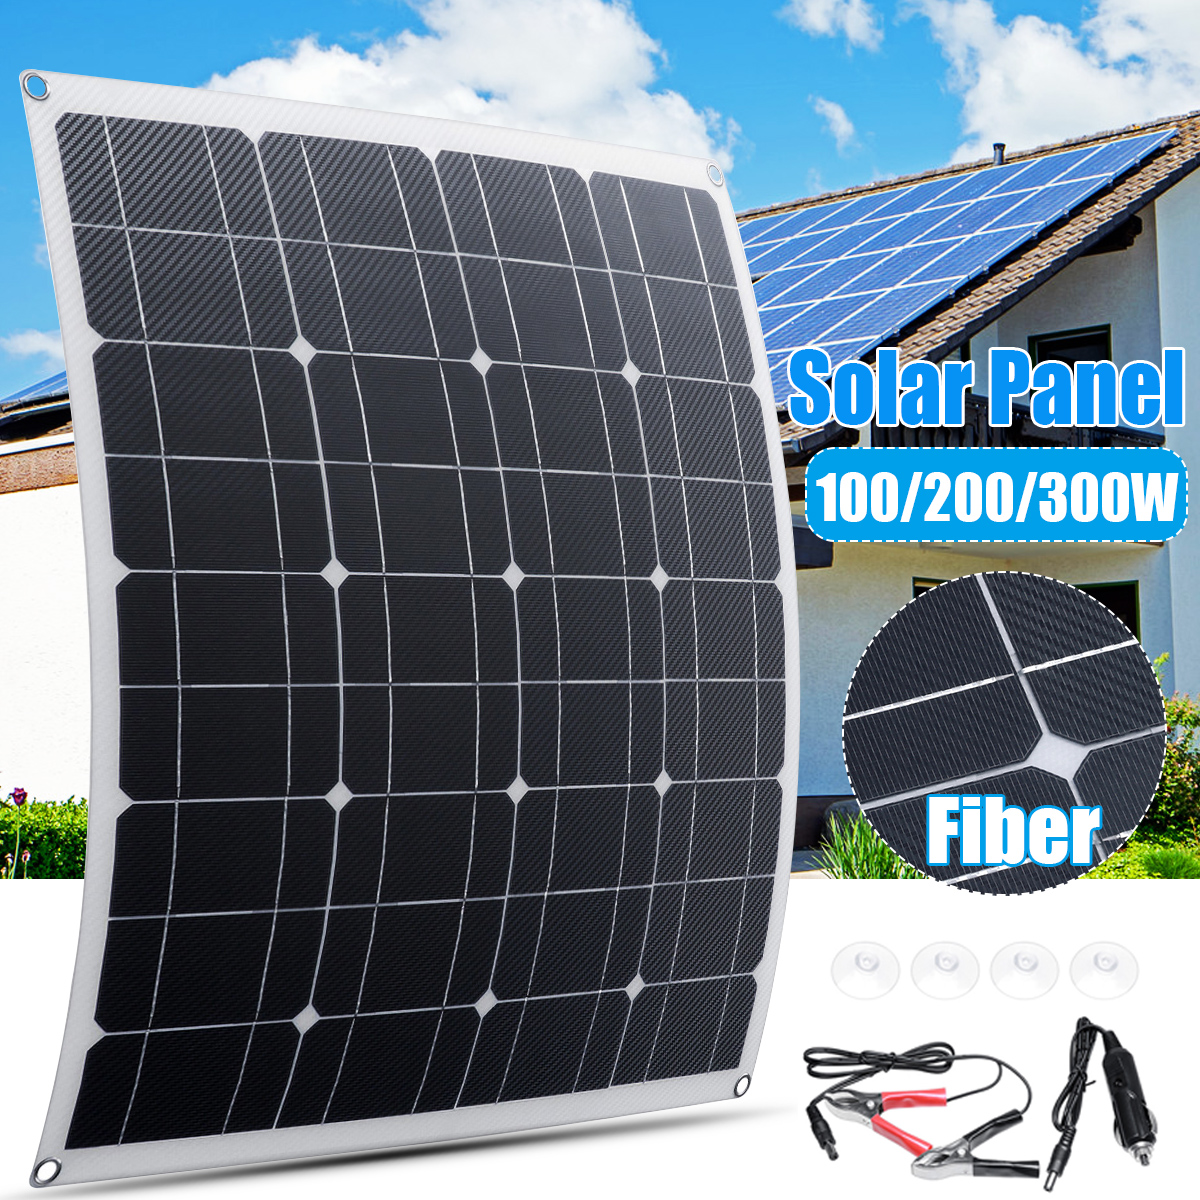 DCUSB-5V18-12V-204060W-Fiber-Solar-Panel-Kit-Monocrystalline-Flexible-Solar-Charger-For-Car-Boat-Bat-1856001-1